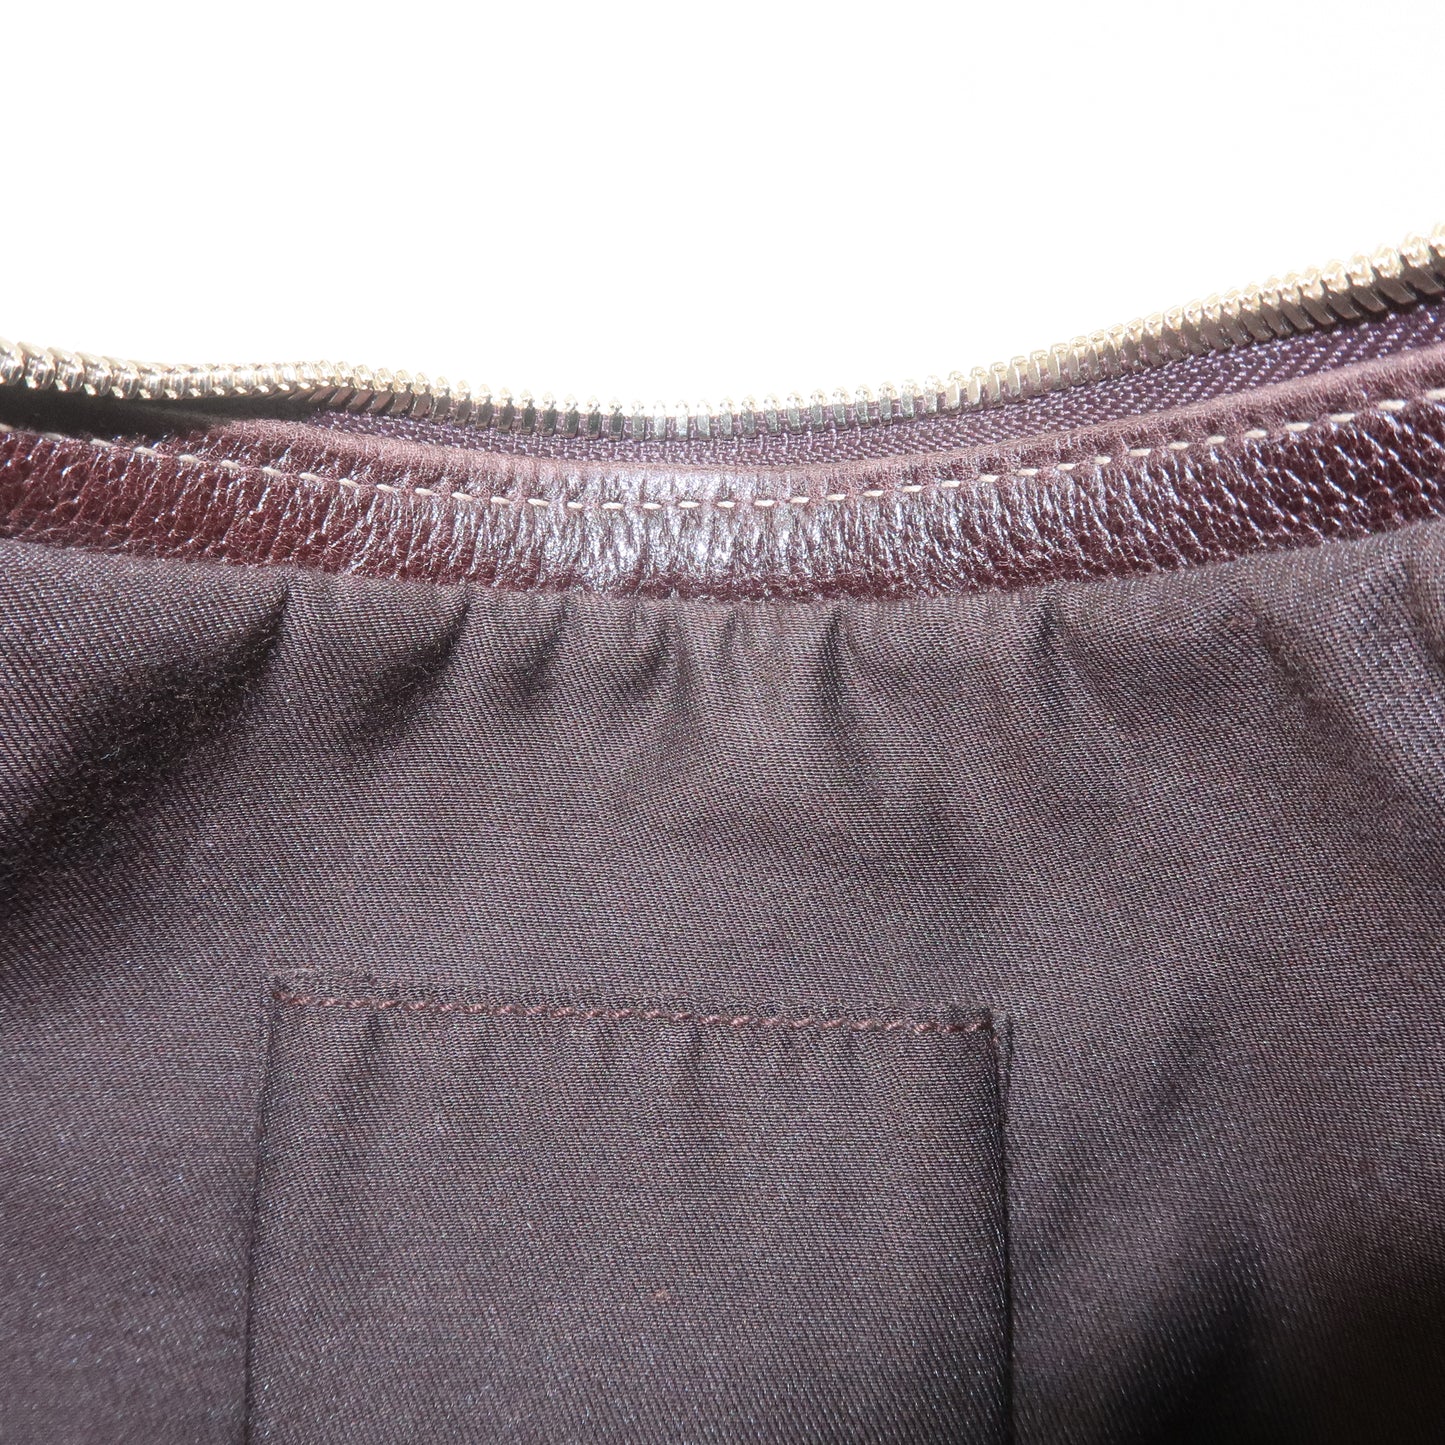 GUCCI Princy GG Canvas Leather Shoulder Bag Beige Brown 162895